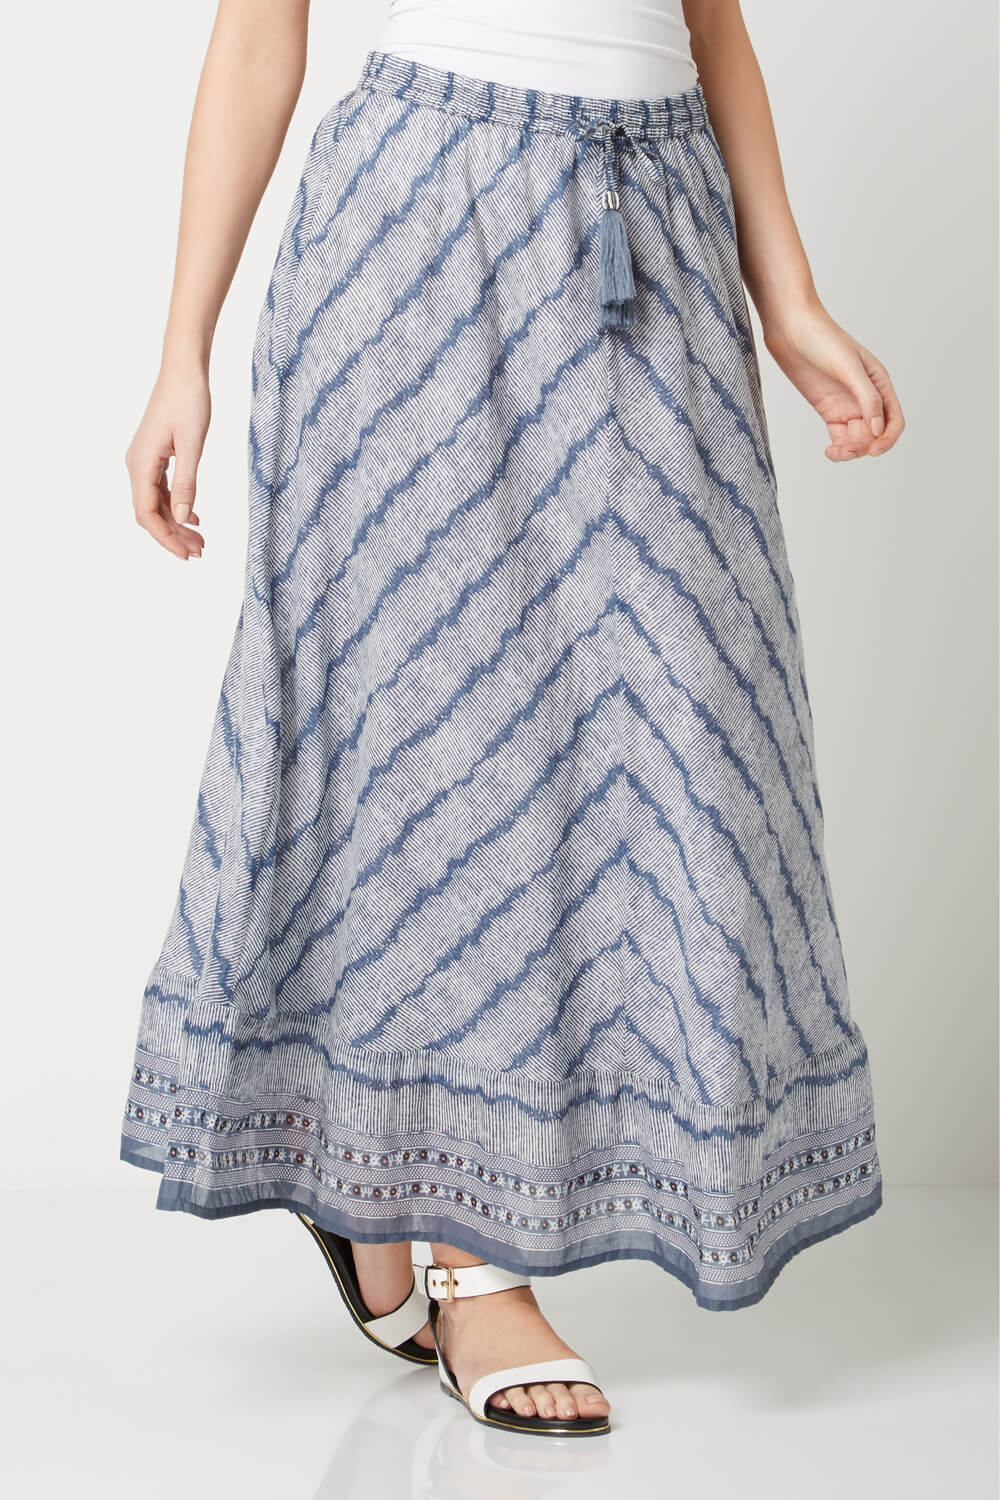 Denim Cotton Boho Print Maxi Skirt, Image 2 of 4